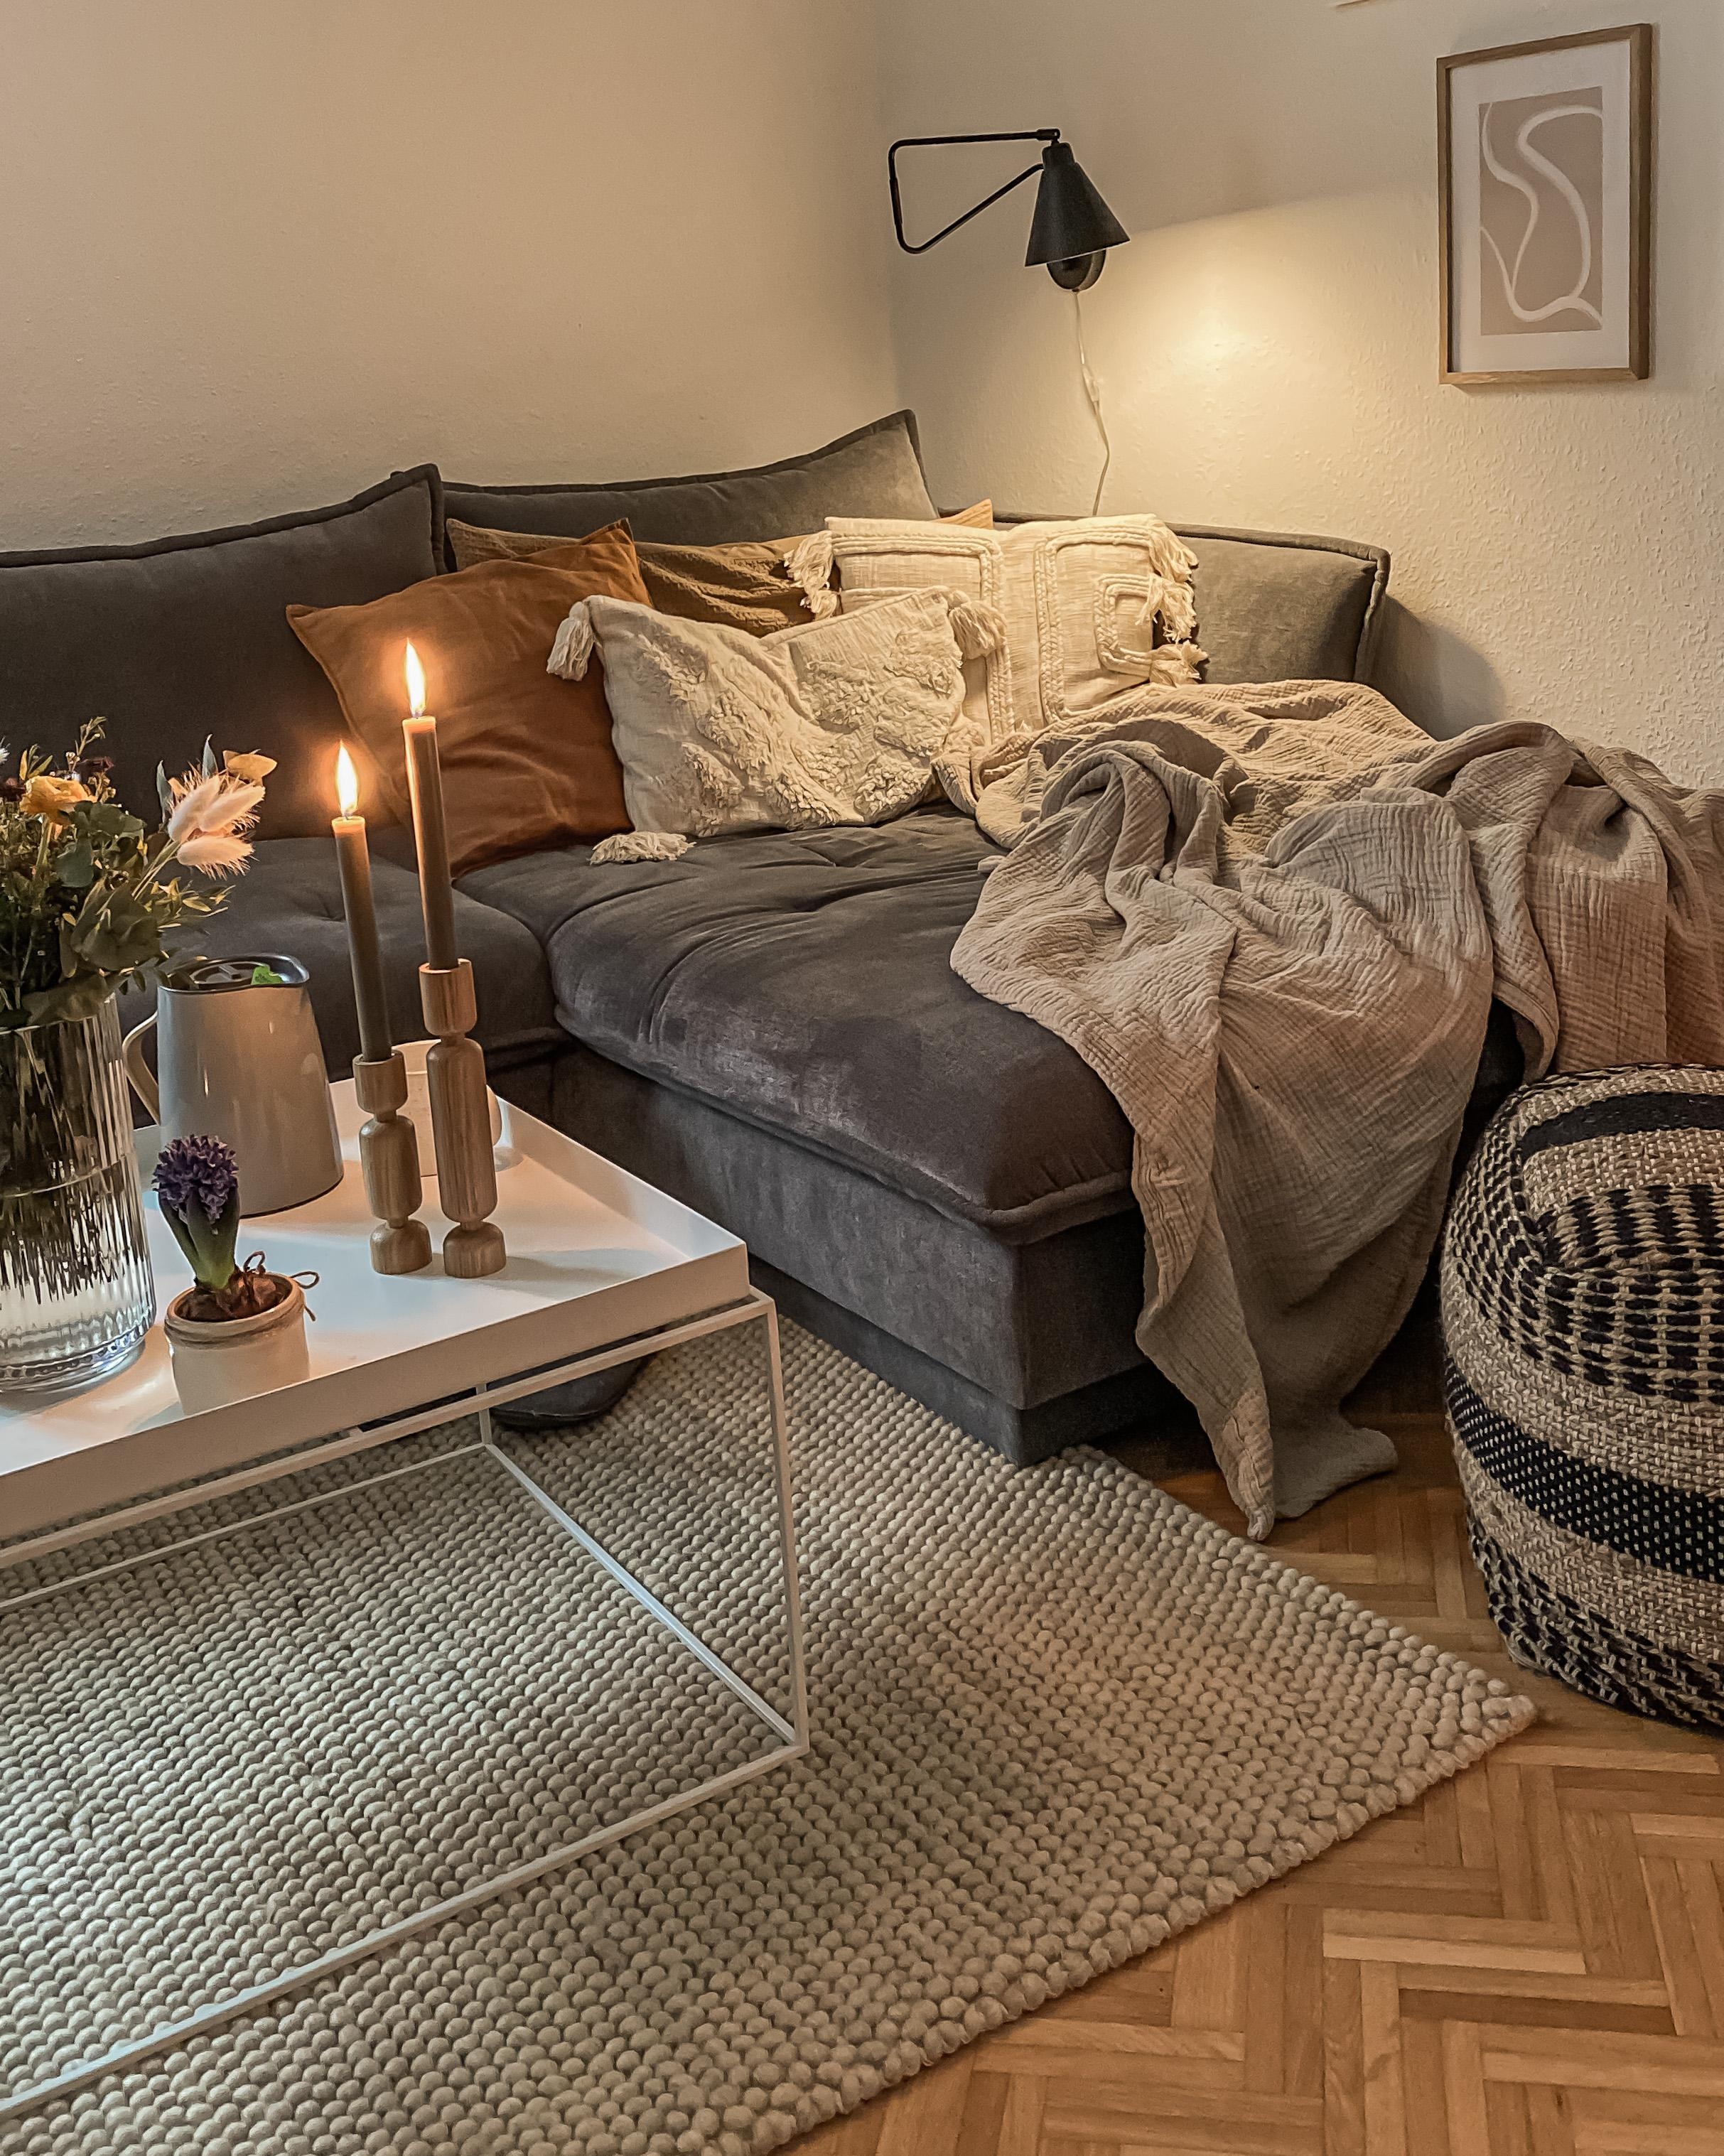 Ich liebe unsere neue Tagesdecke aus Baumwollmusselin!💛 #couch #couchstyle #hygge #hyggehome #cozyhome #boho 